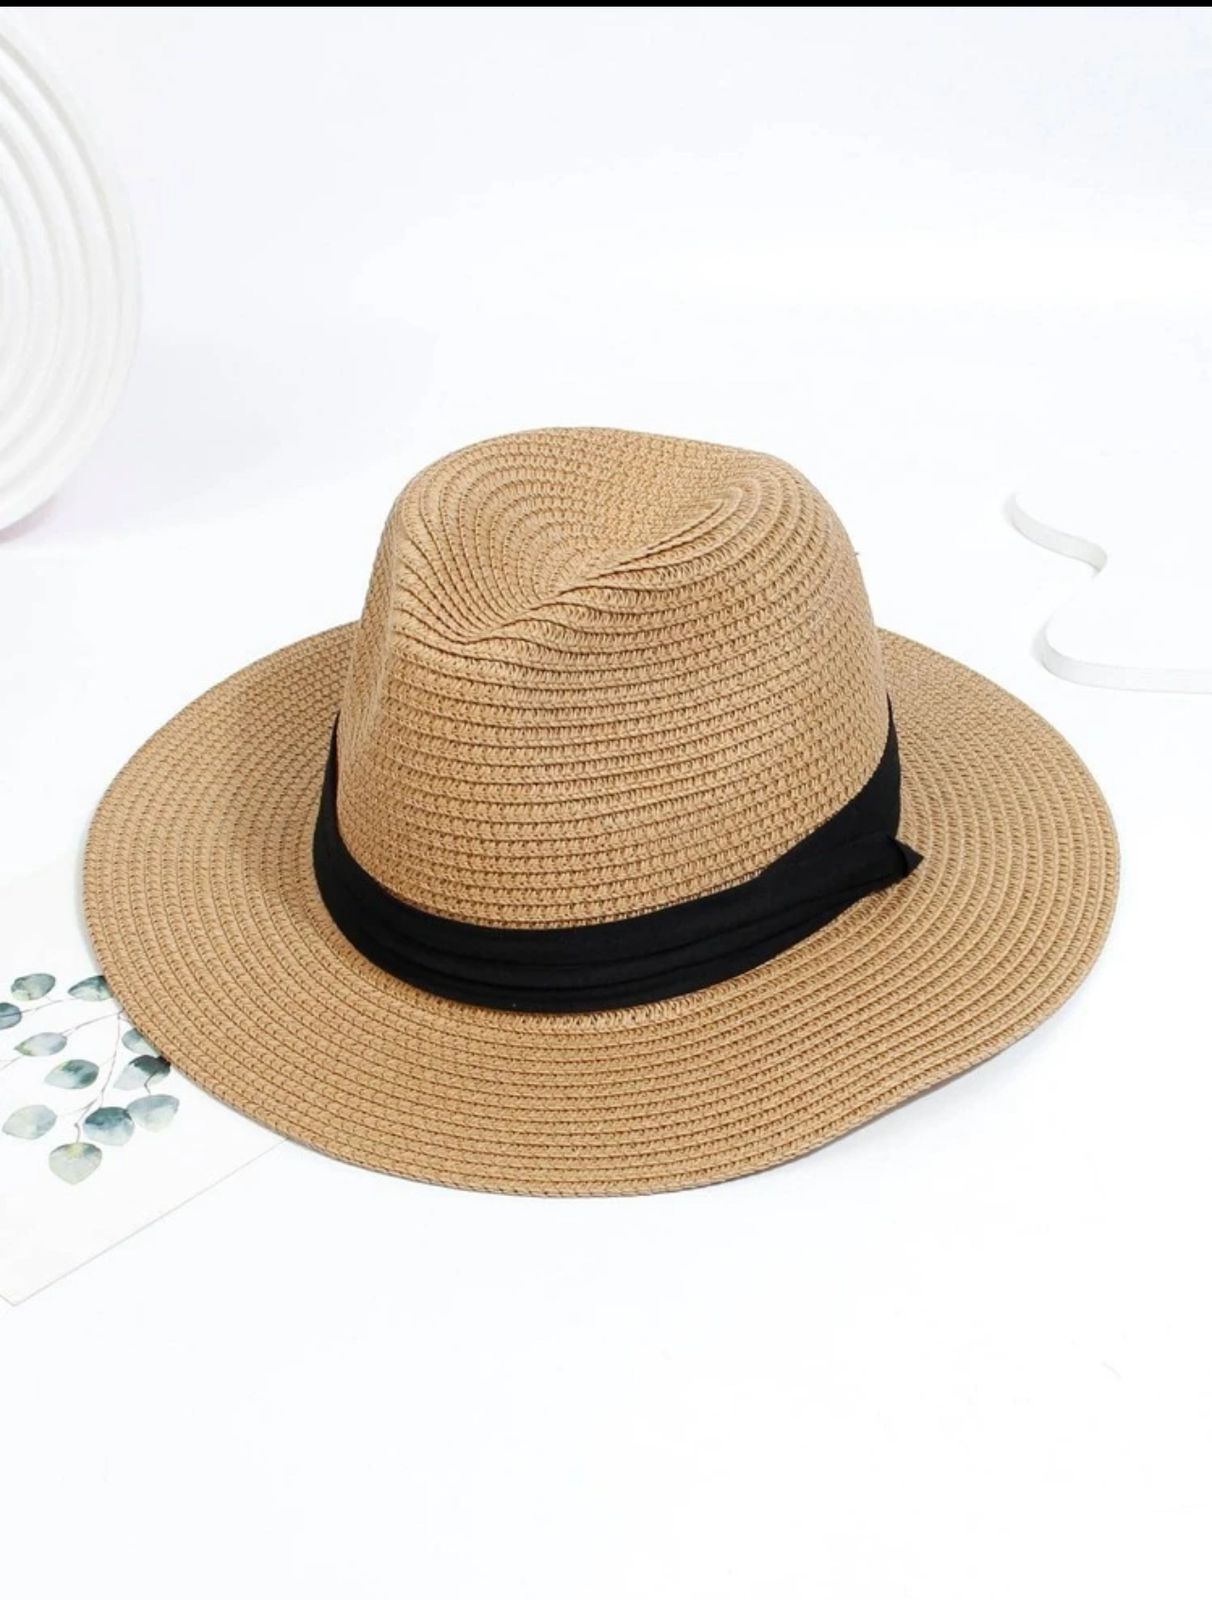 Essentials - Sombrero Panama Tostado